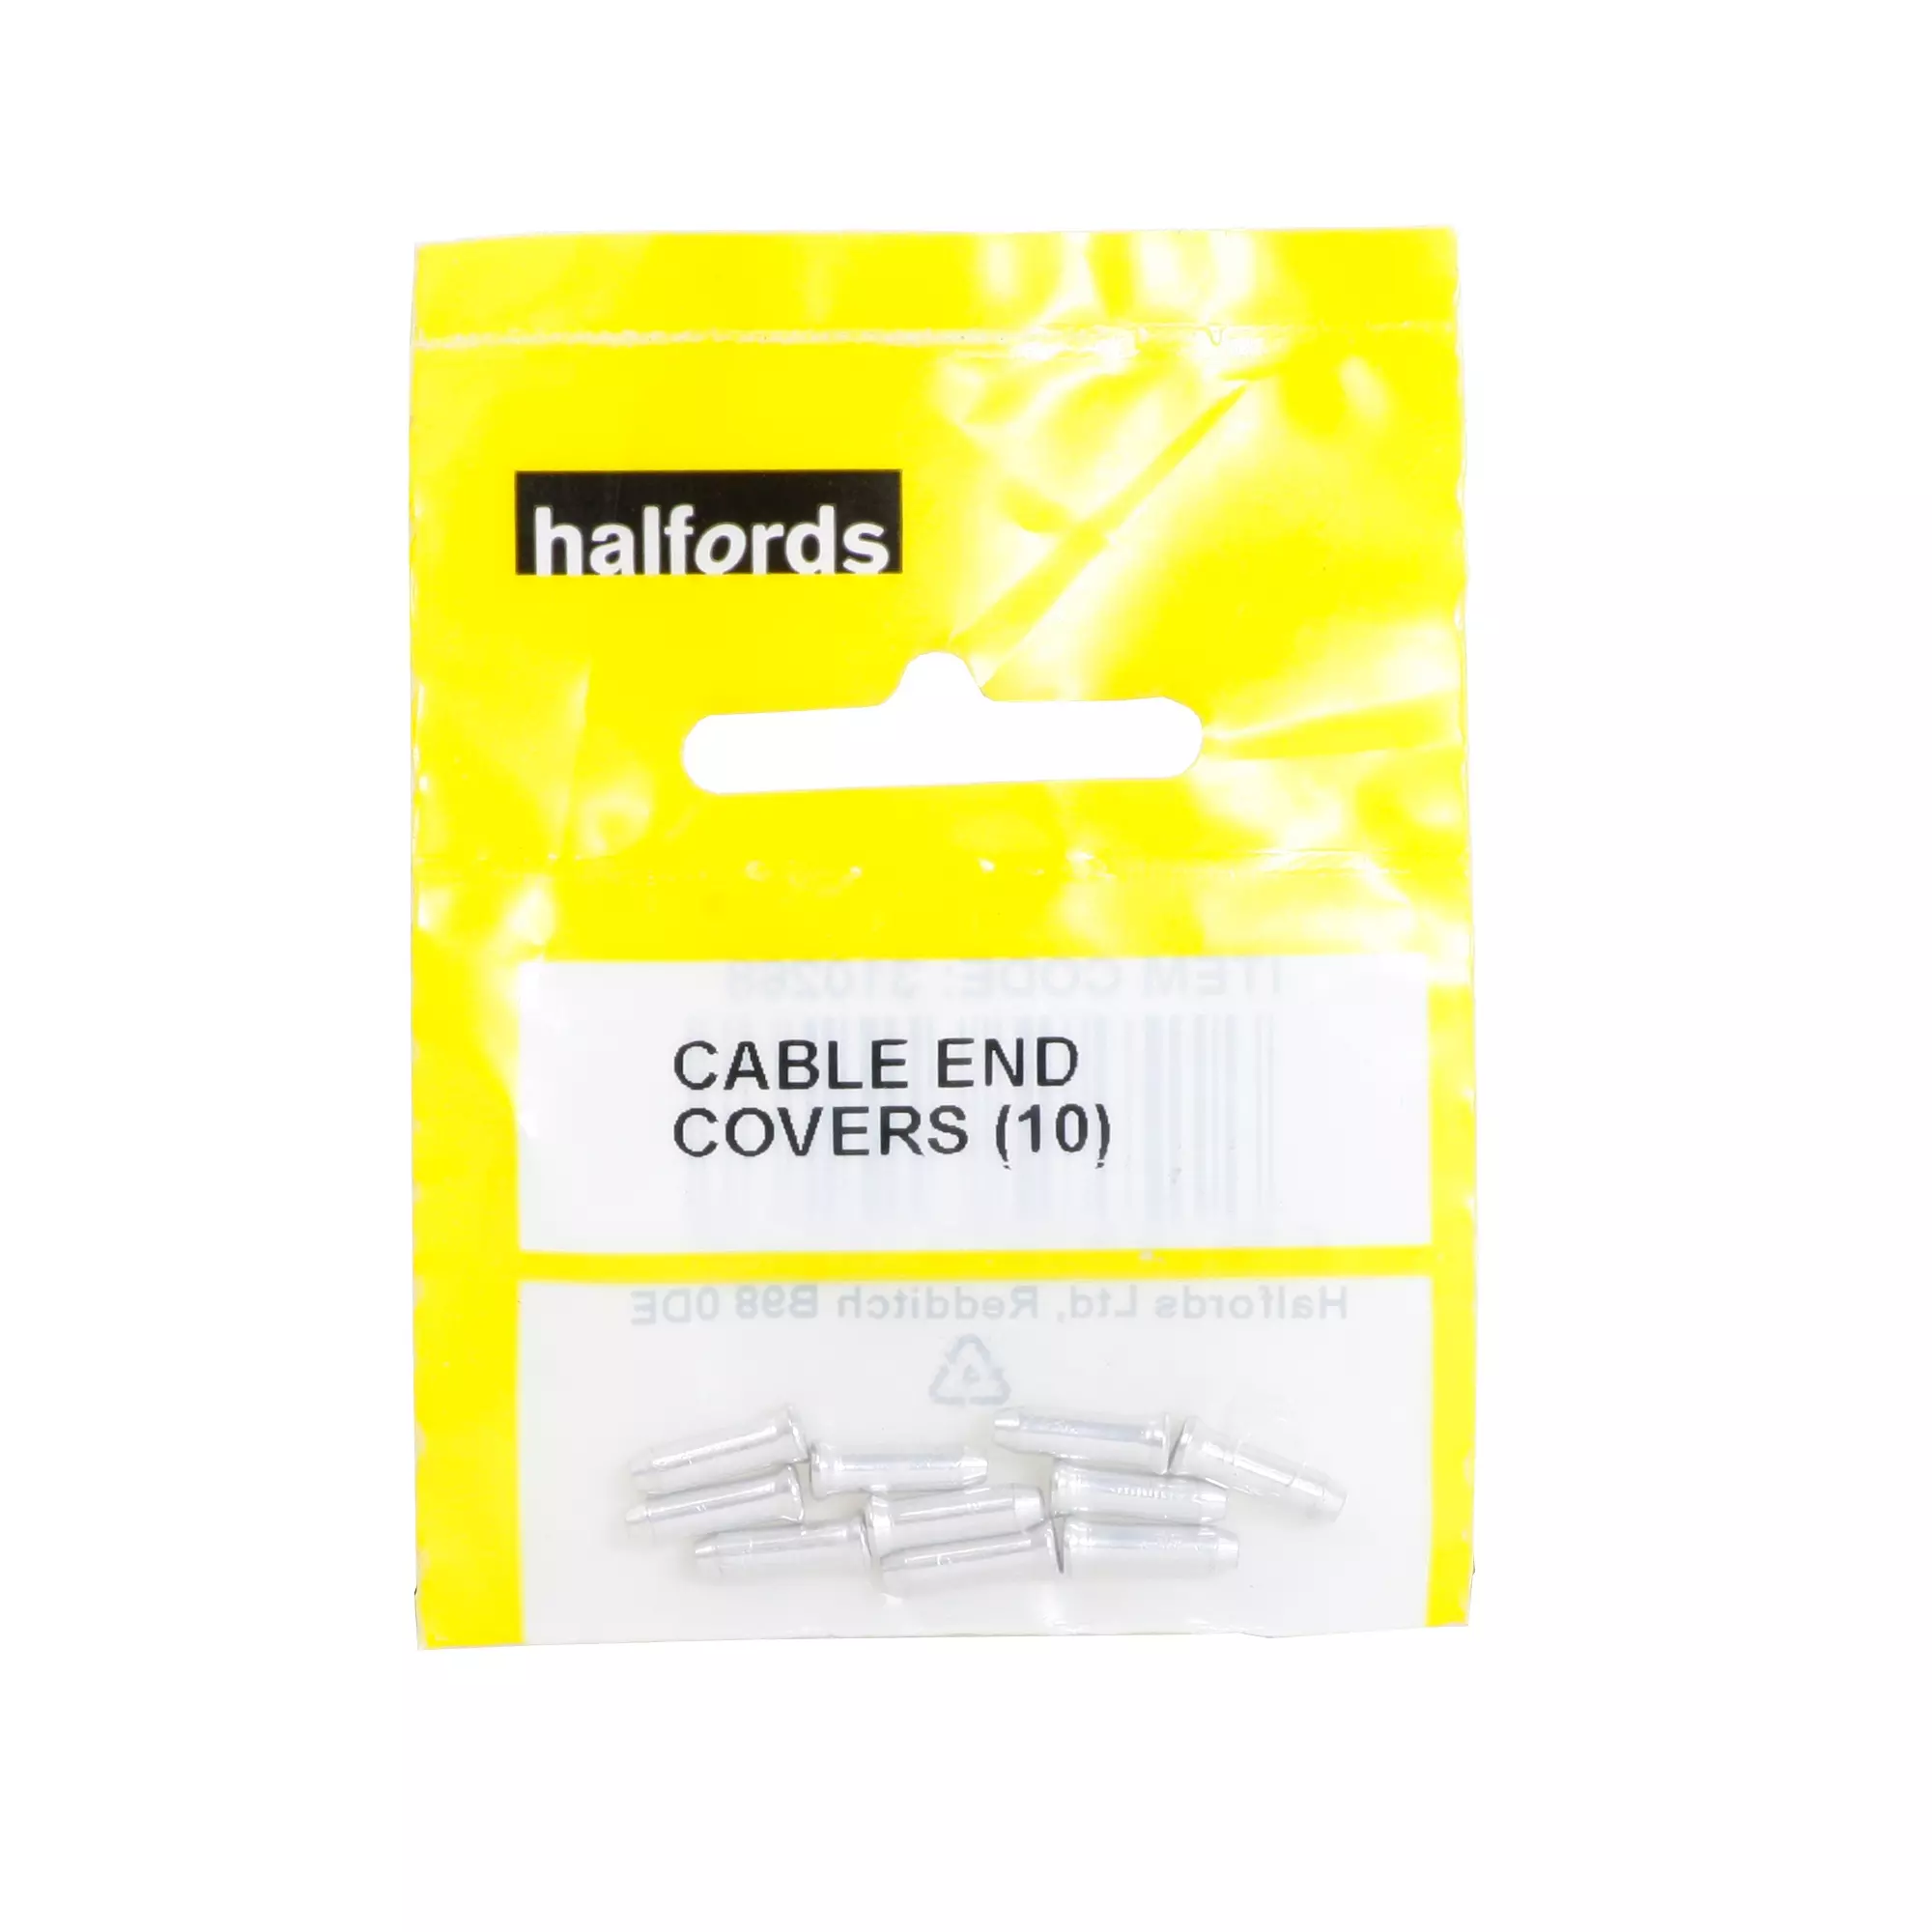 halfords gear cable